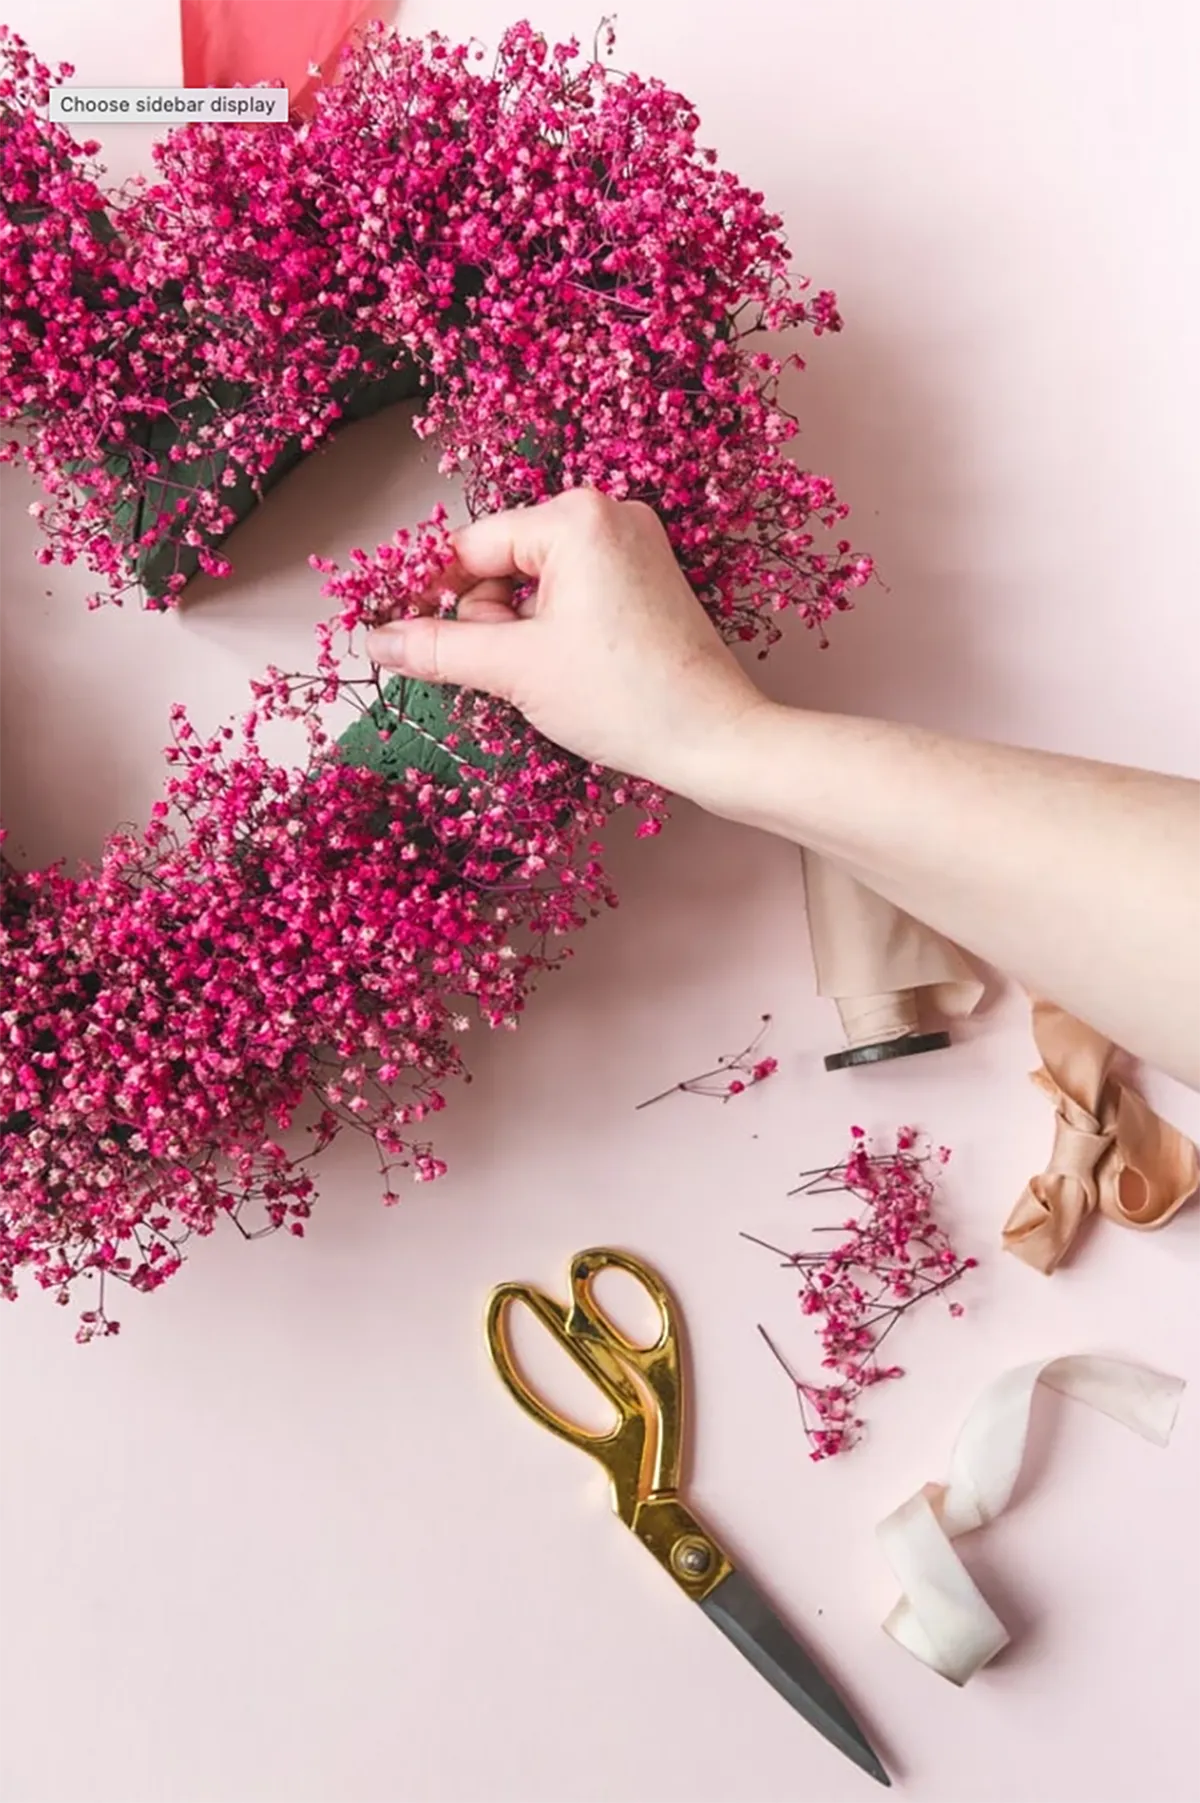 diy valentines decorations - flower wreath of pink babys breath